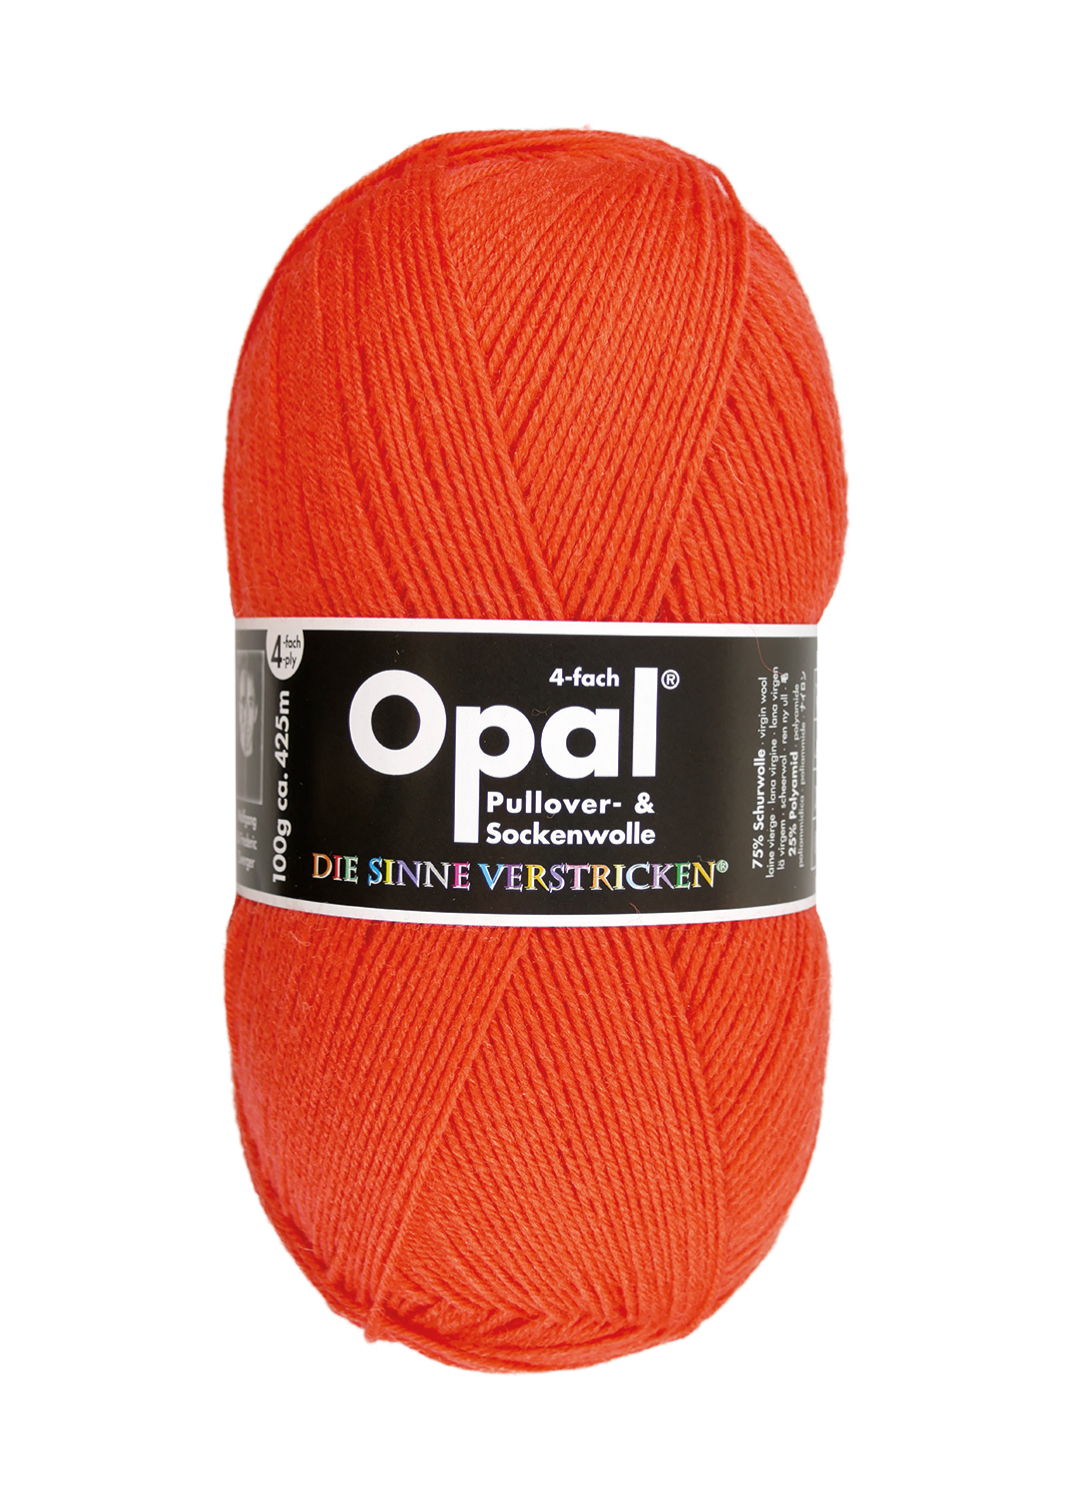 OPAL uni - 4-fach Sockenwolle 5181 - orange